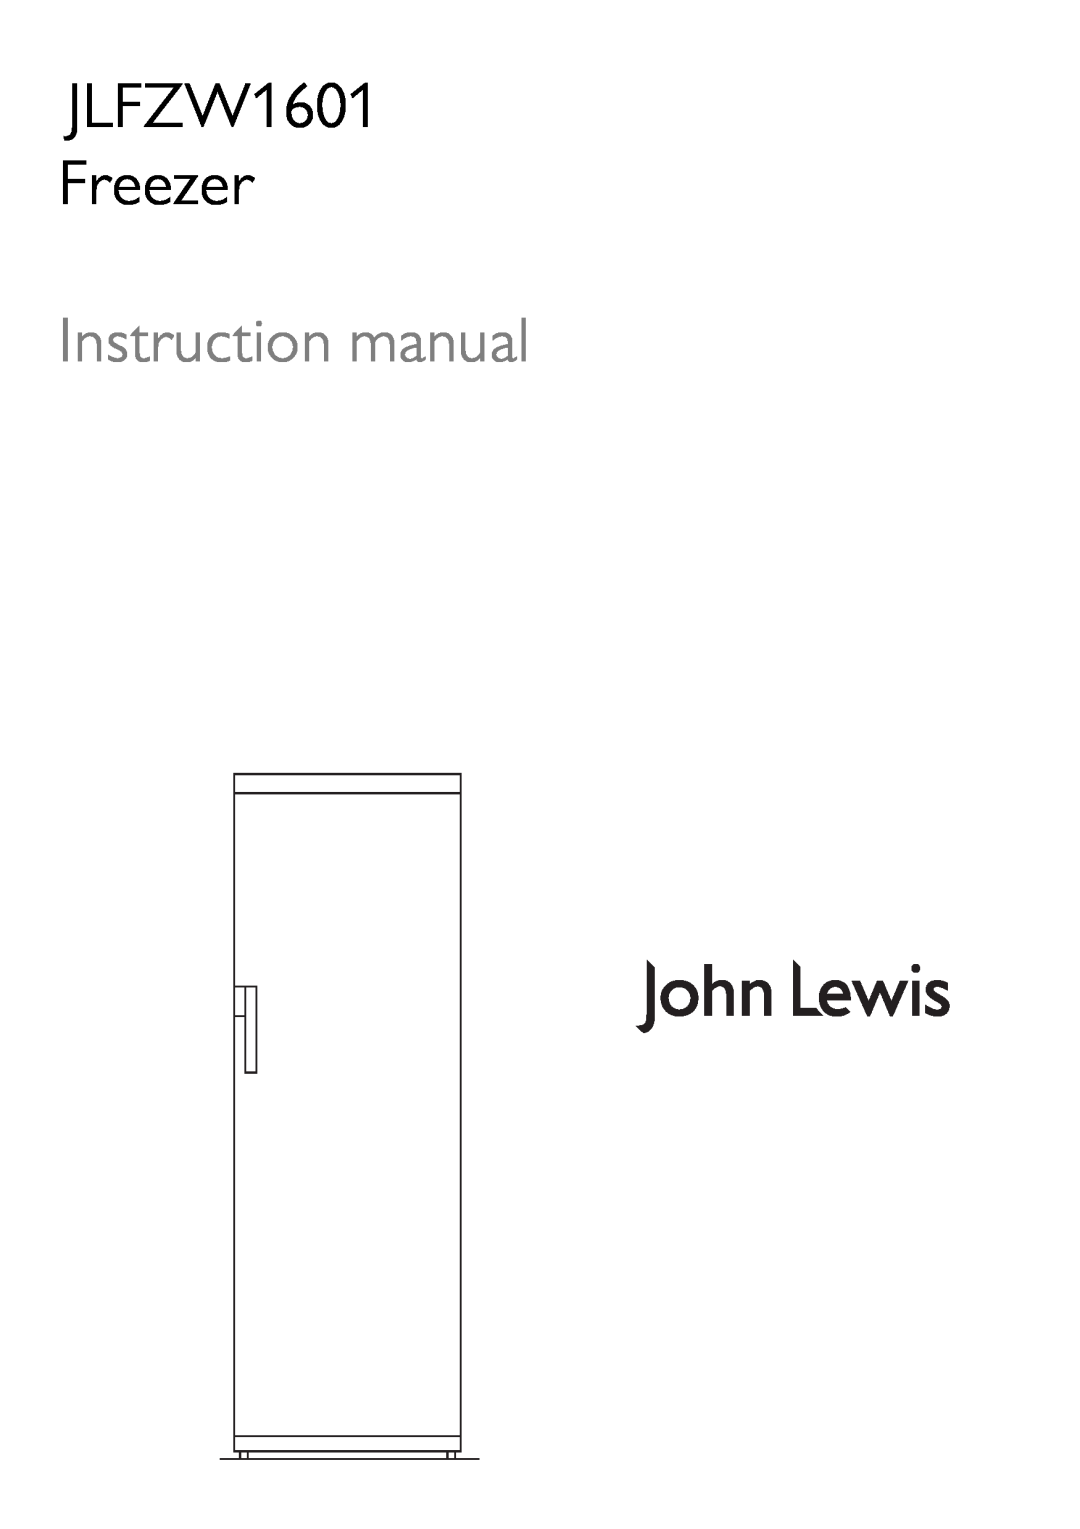 John Lewis instruction manual JLFZW1601 Freezer 